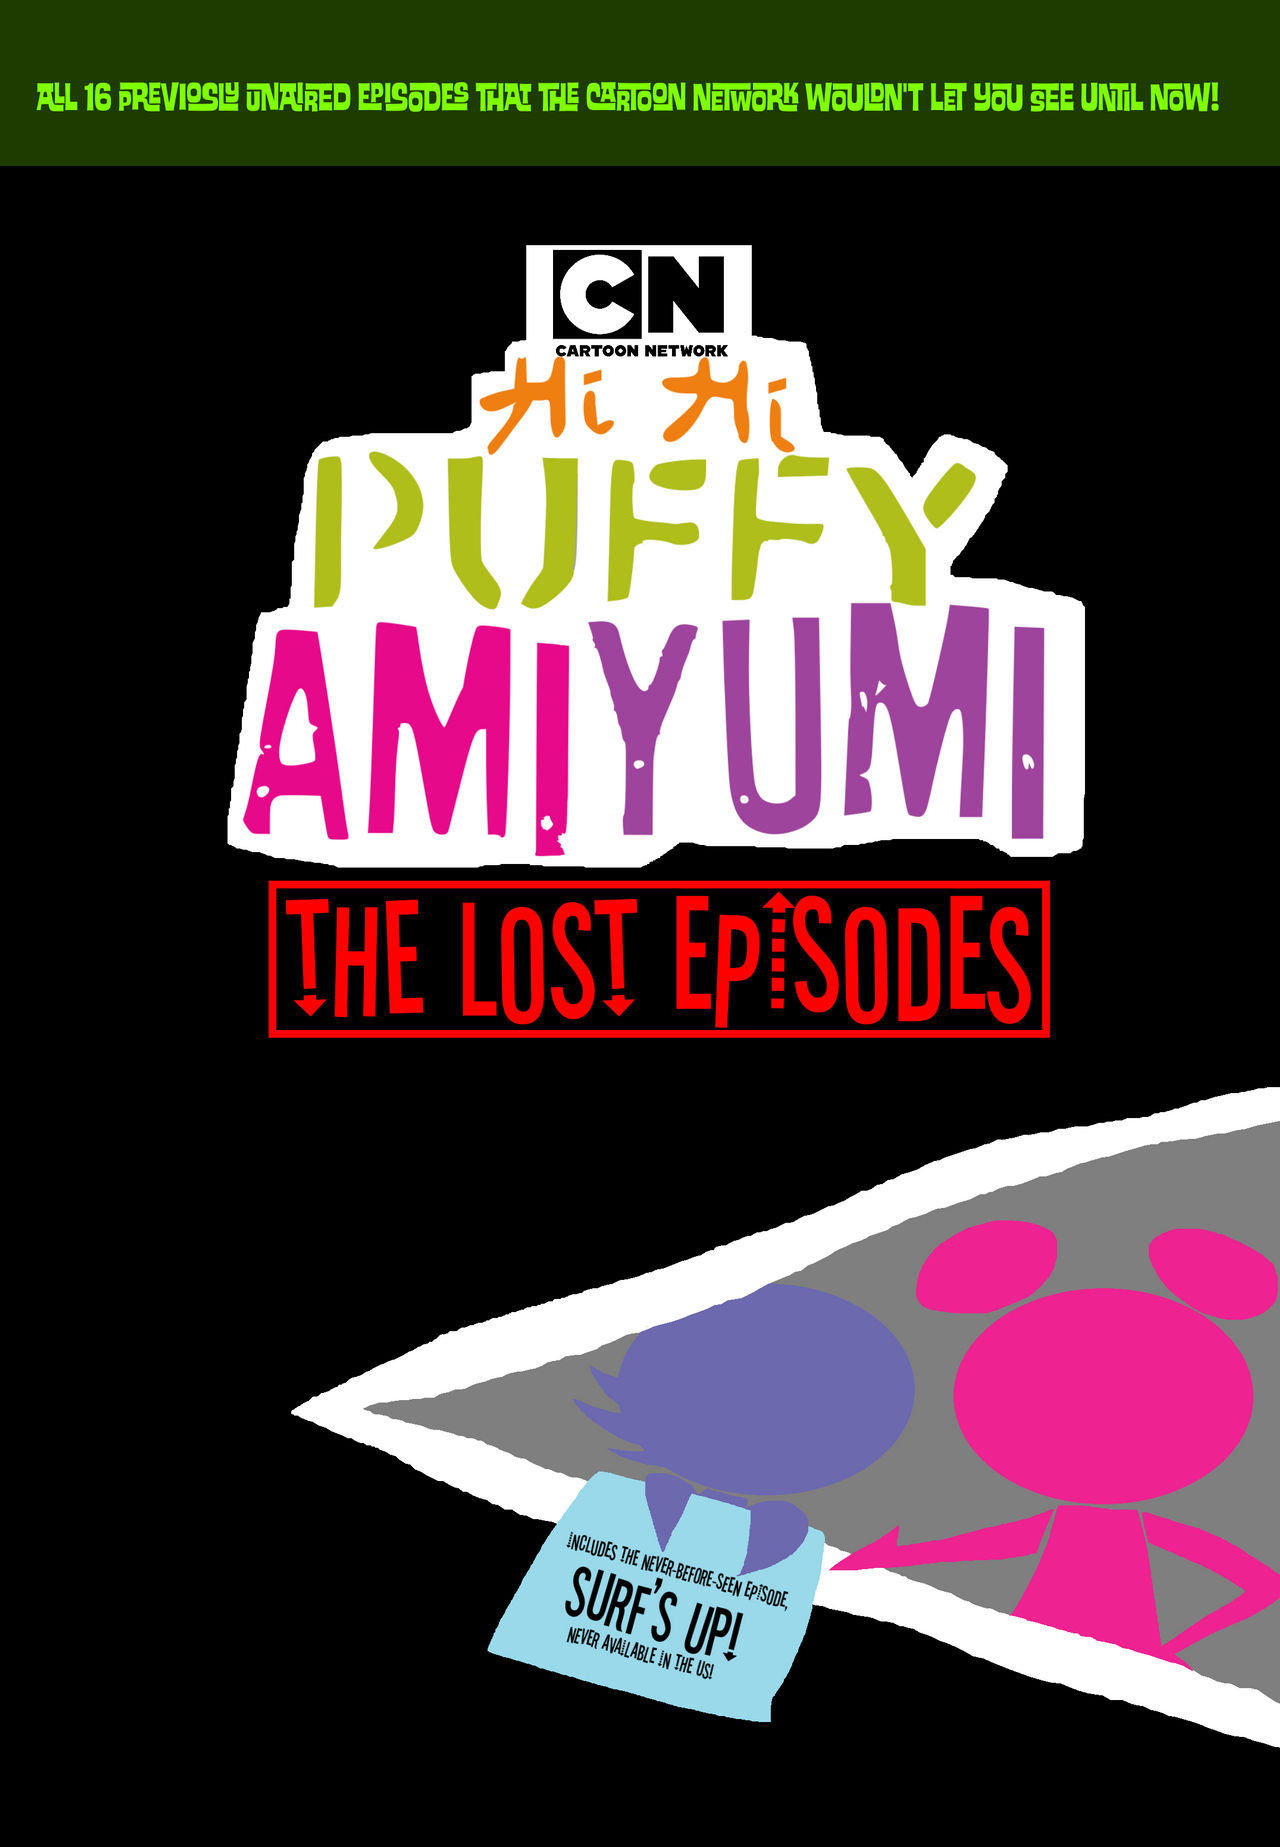 Hi Hi Puffy AmiYumi Season 1: Where To Watch Every Episode